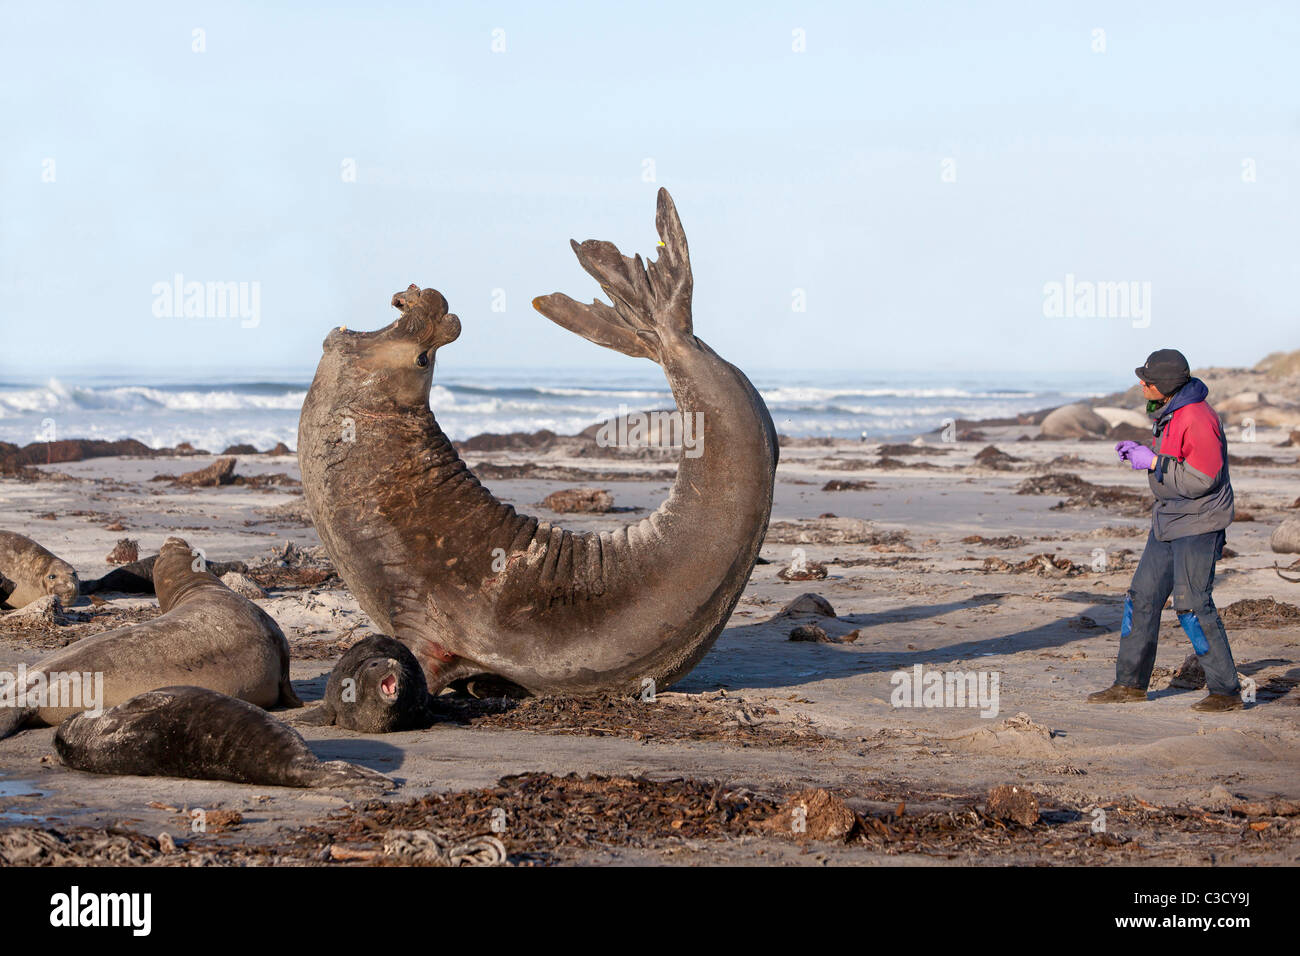 Southern Elephant Seal (Mirounga leonina). Woman approaching a roaring bull and its harem on a beach. Stock Photo